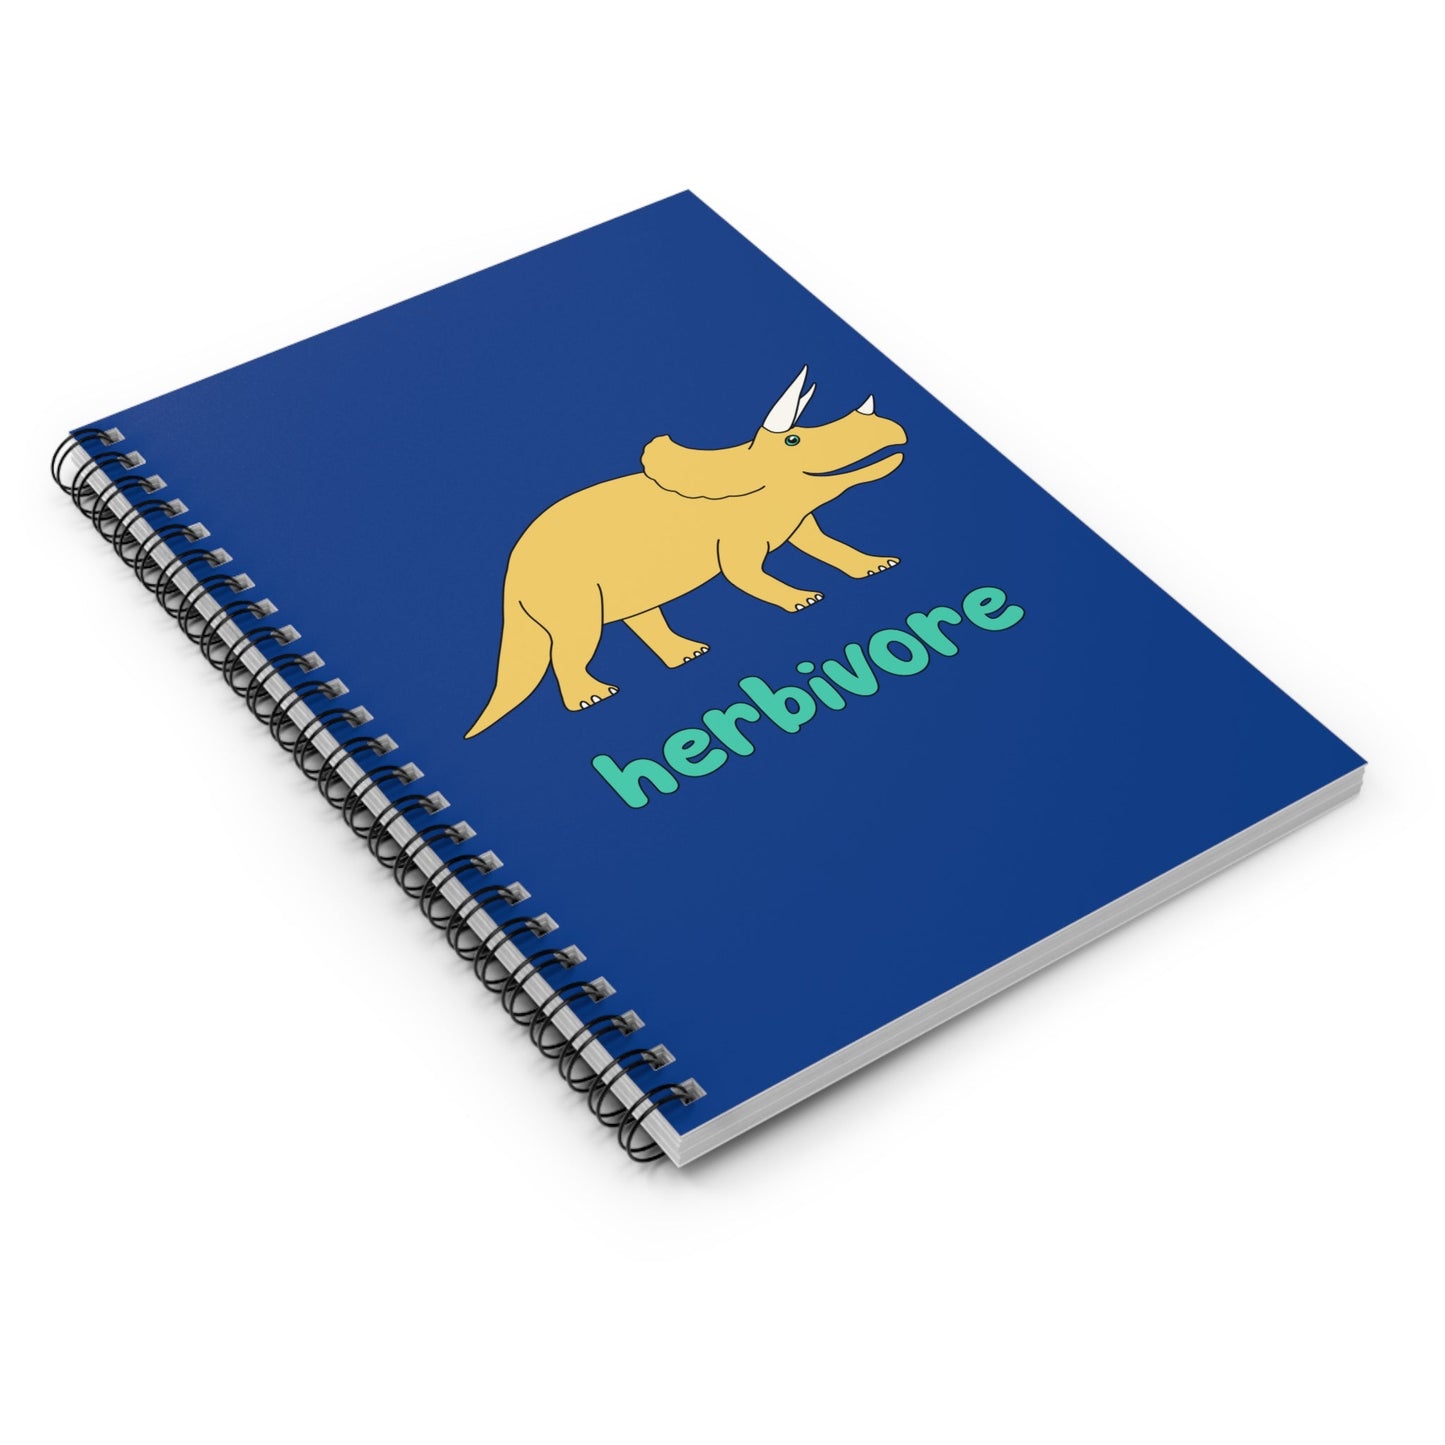 Herbivore | Notebook - Detezi Designs-15308079408893761140